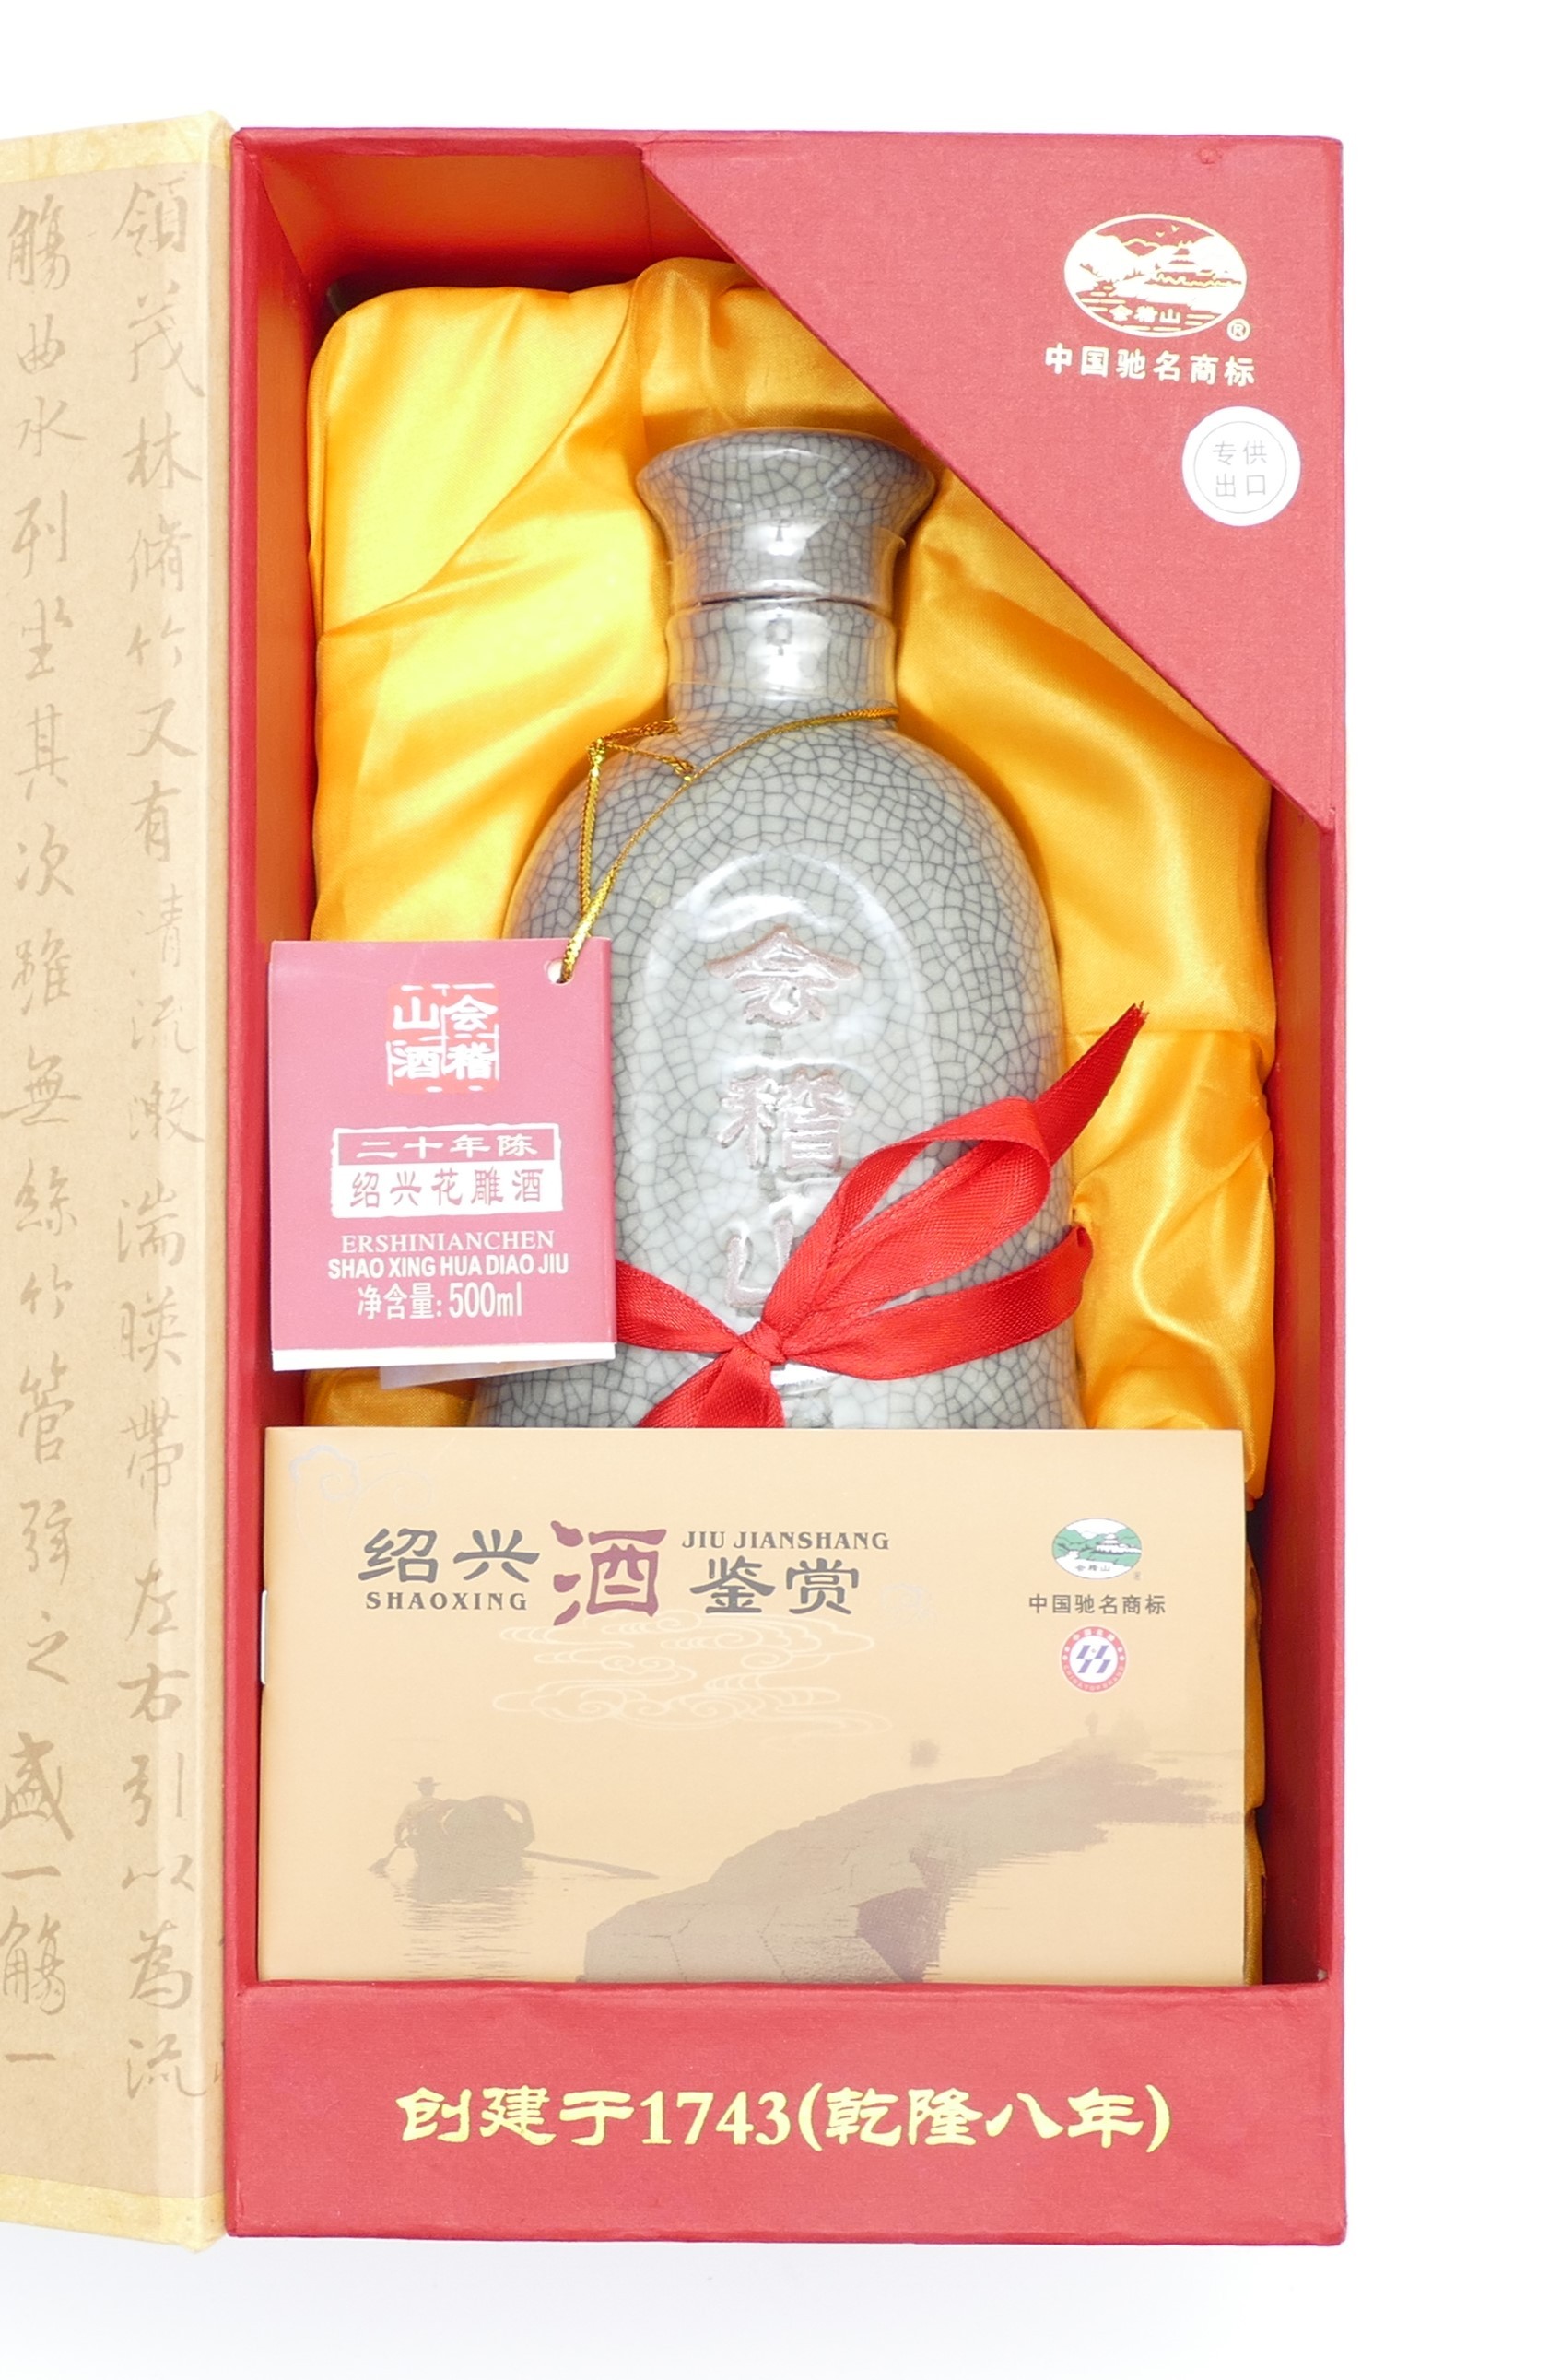 Kuaiji Mountain, twenty year old Shaoxing Huadiao wine 500ml bottle in a presentation box, - Image 2 of 3